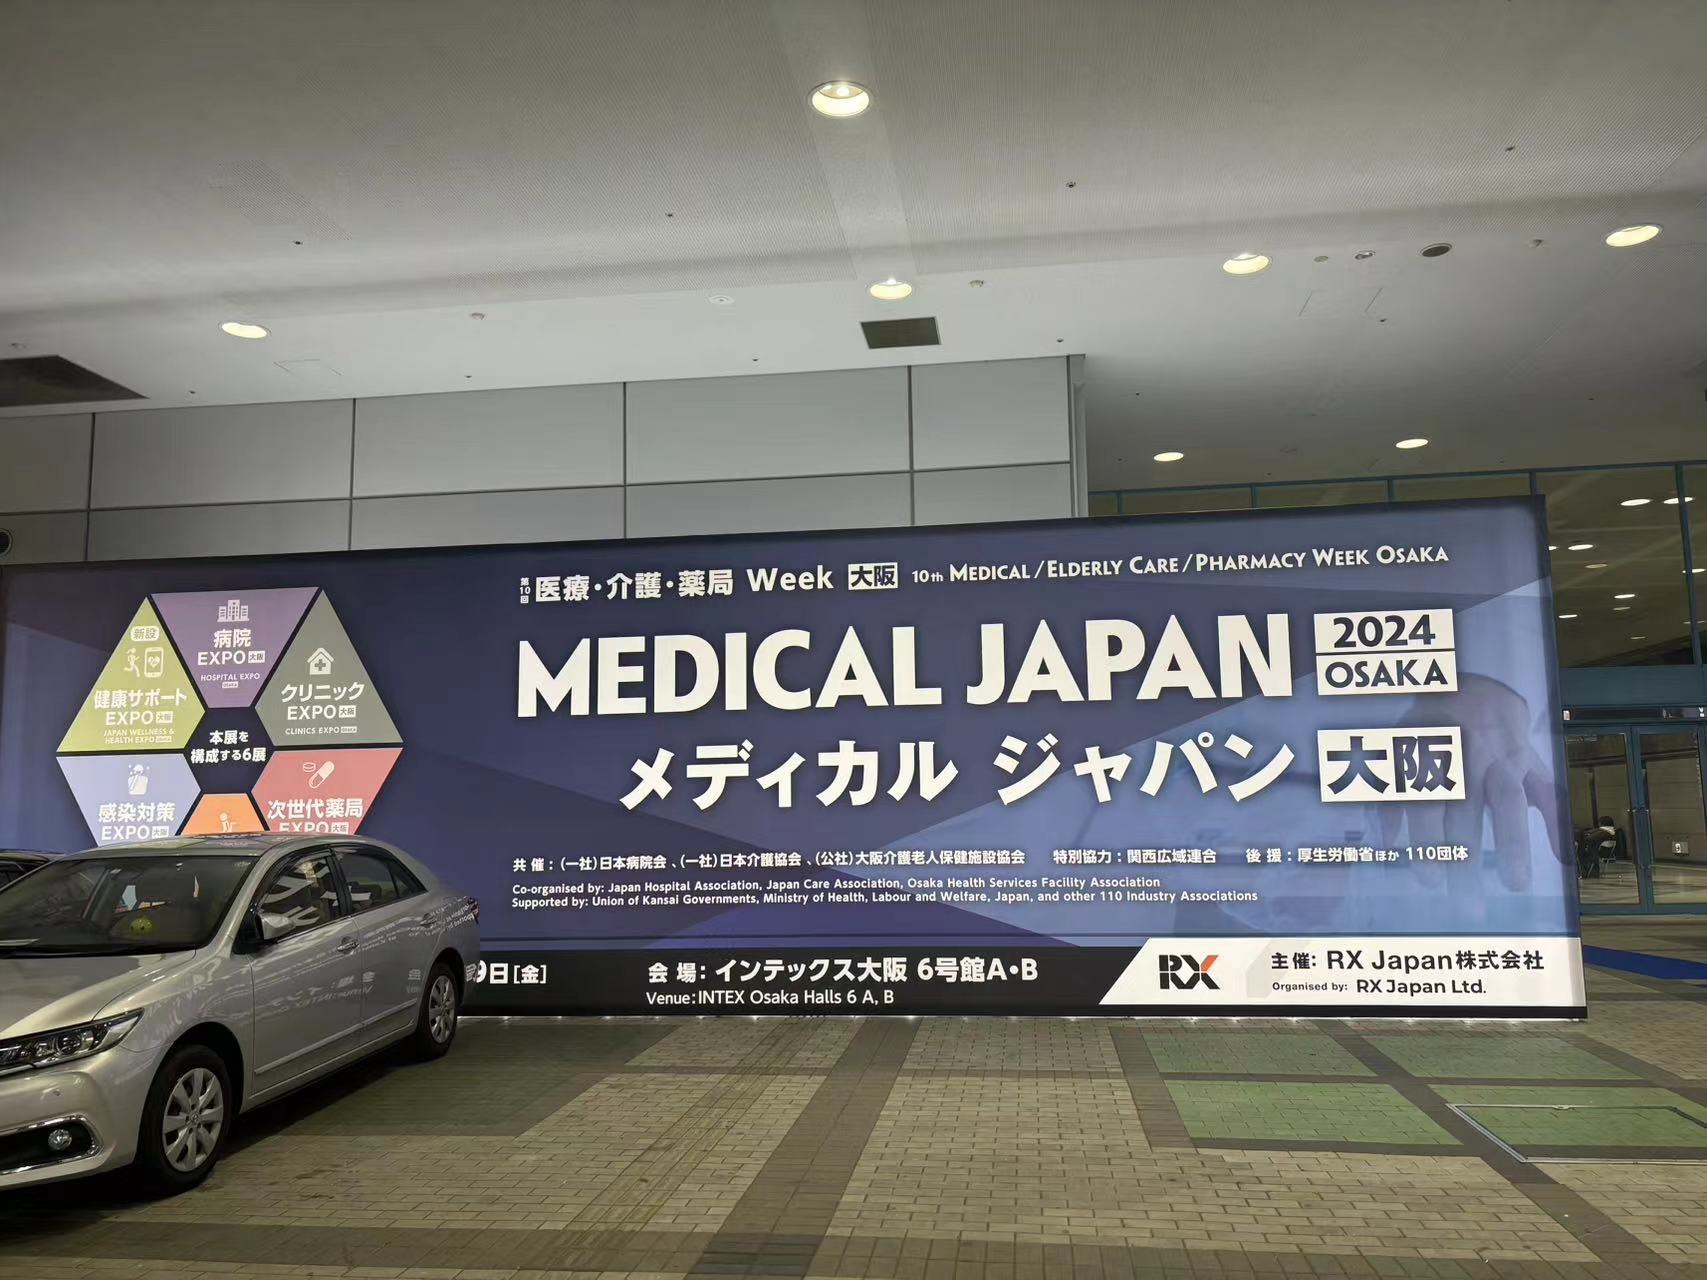 Medical Japan 2024 OSAKA